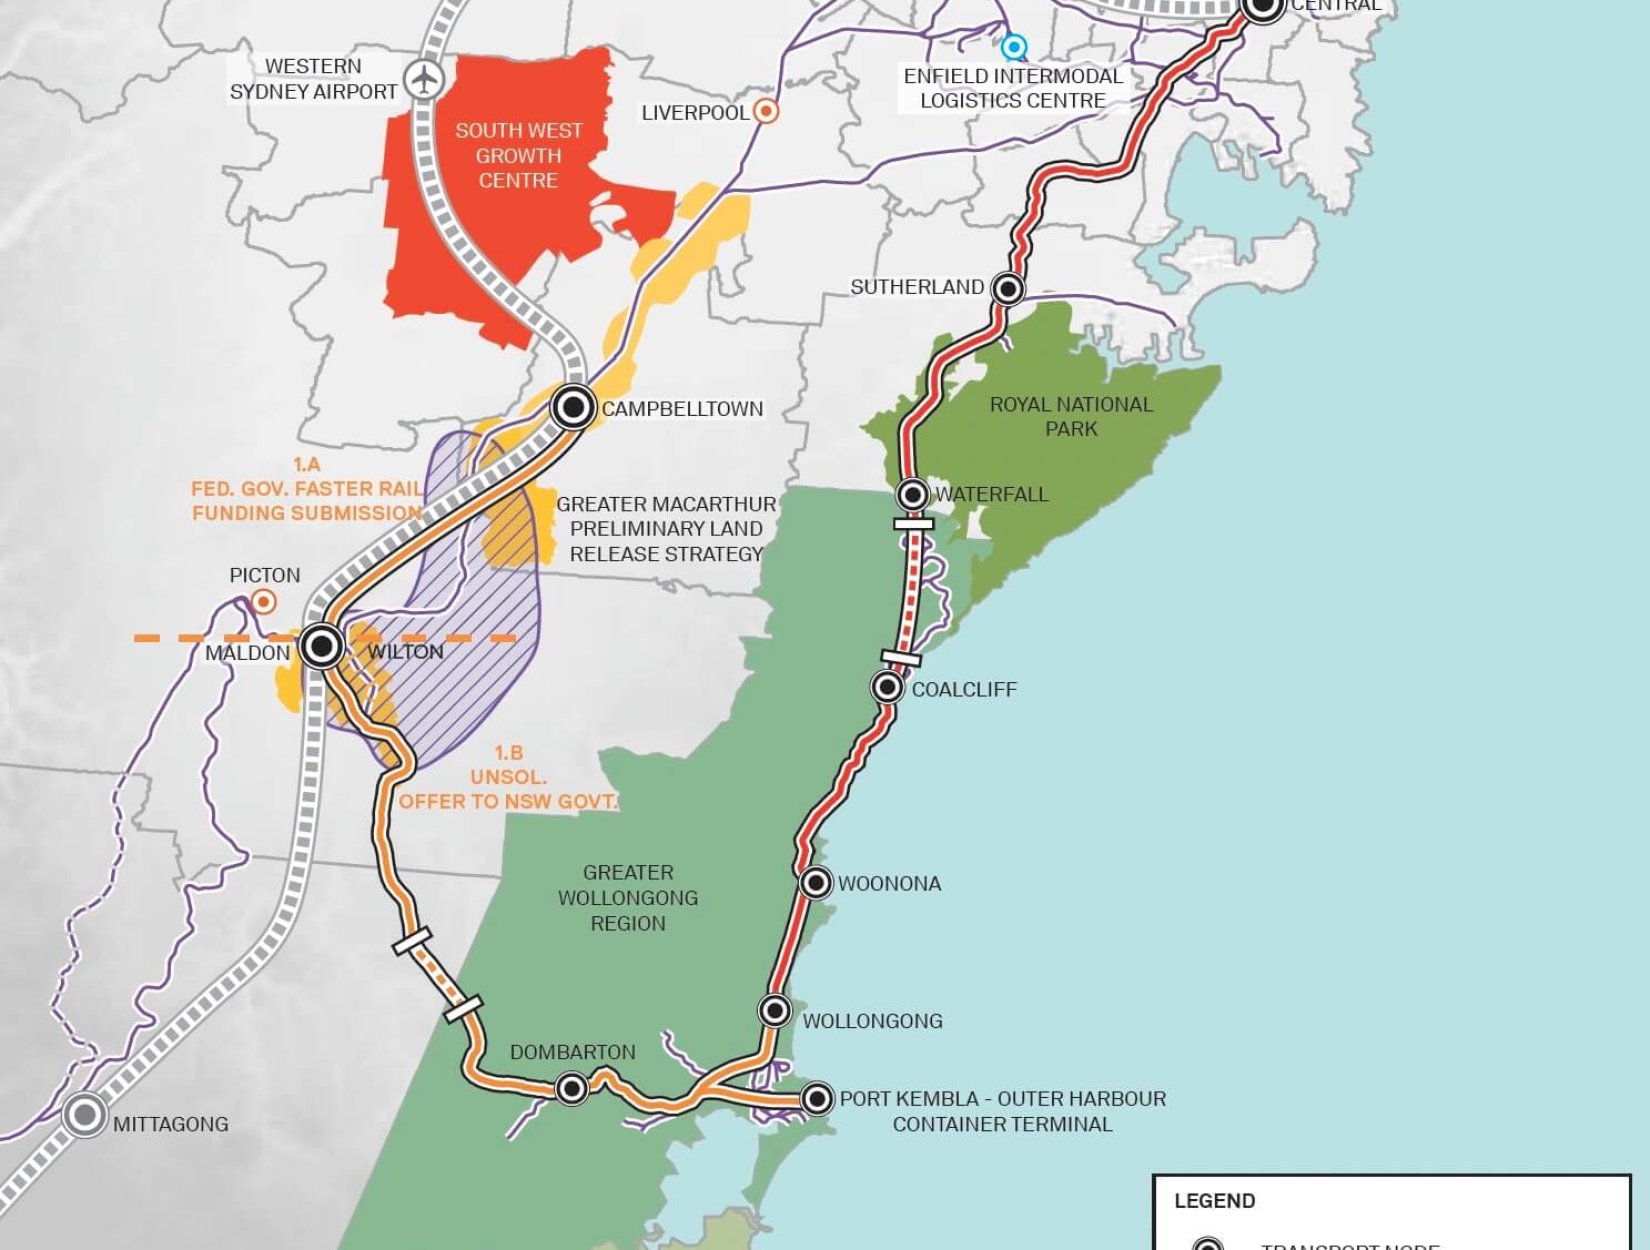 Sydney Maldon and High Speed Rail Link